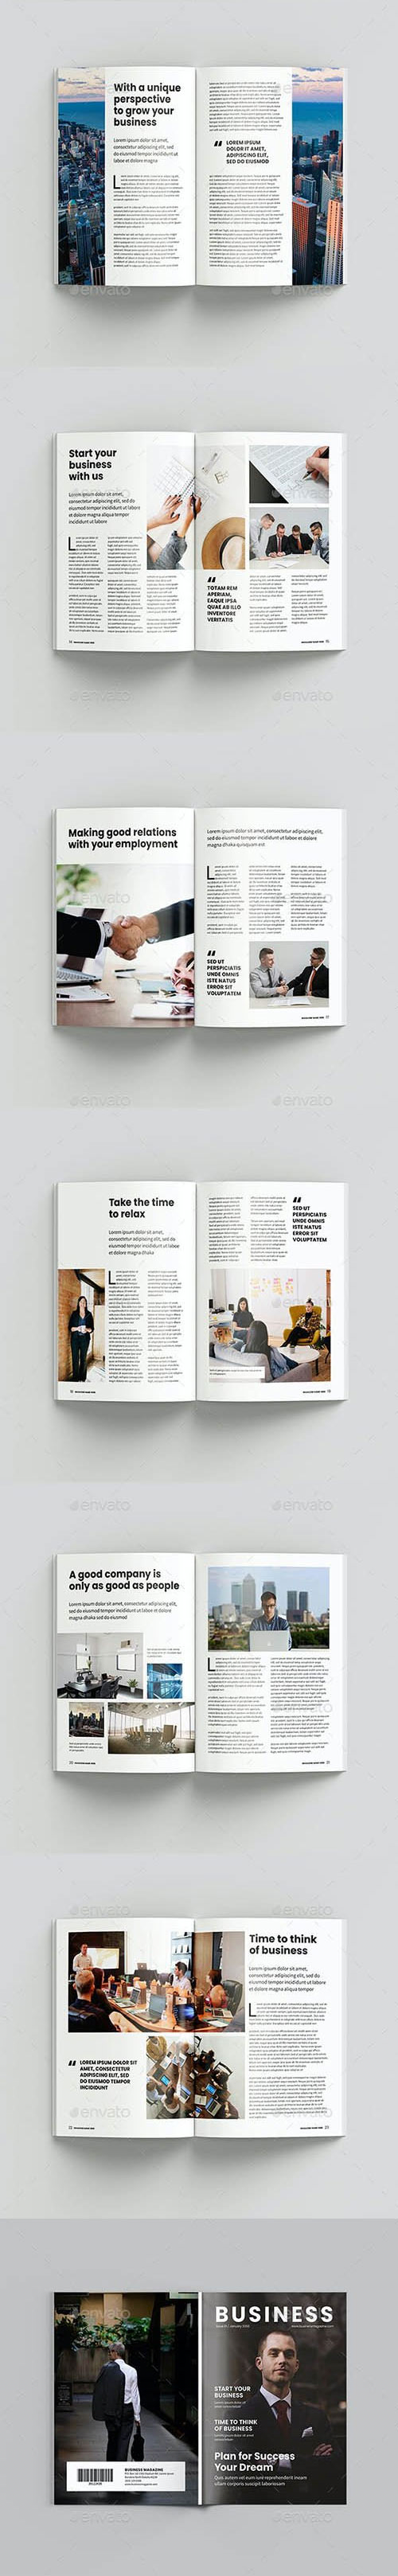 GraphicRiver - Business Magazine 28160800